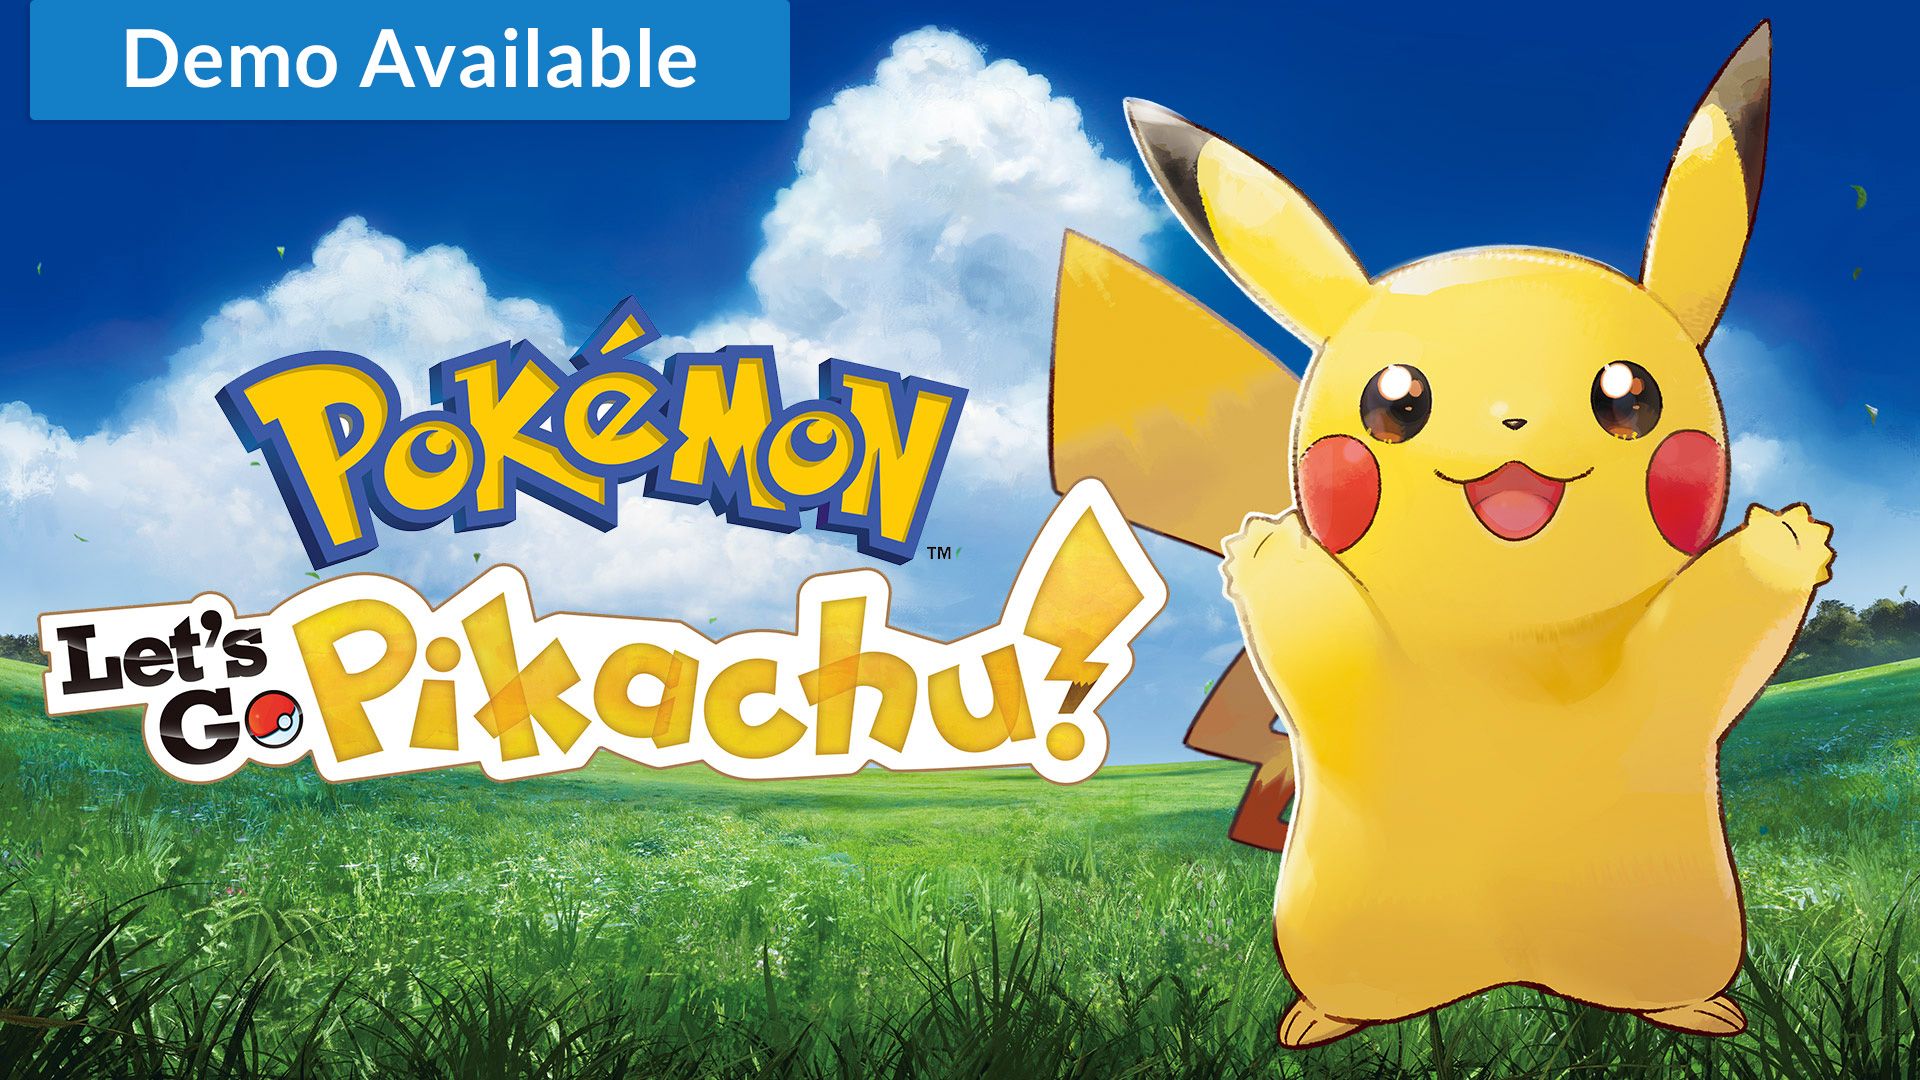 Pokémon: Let's Go, Pikachu! for Nintendo Switch Game Details